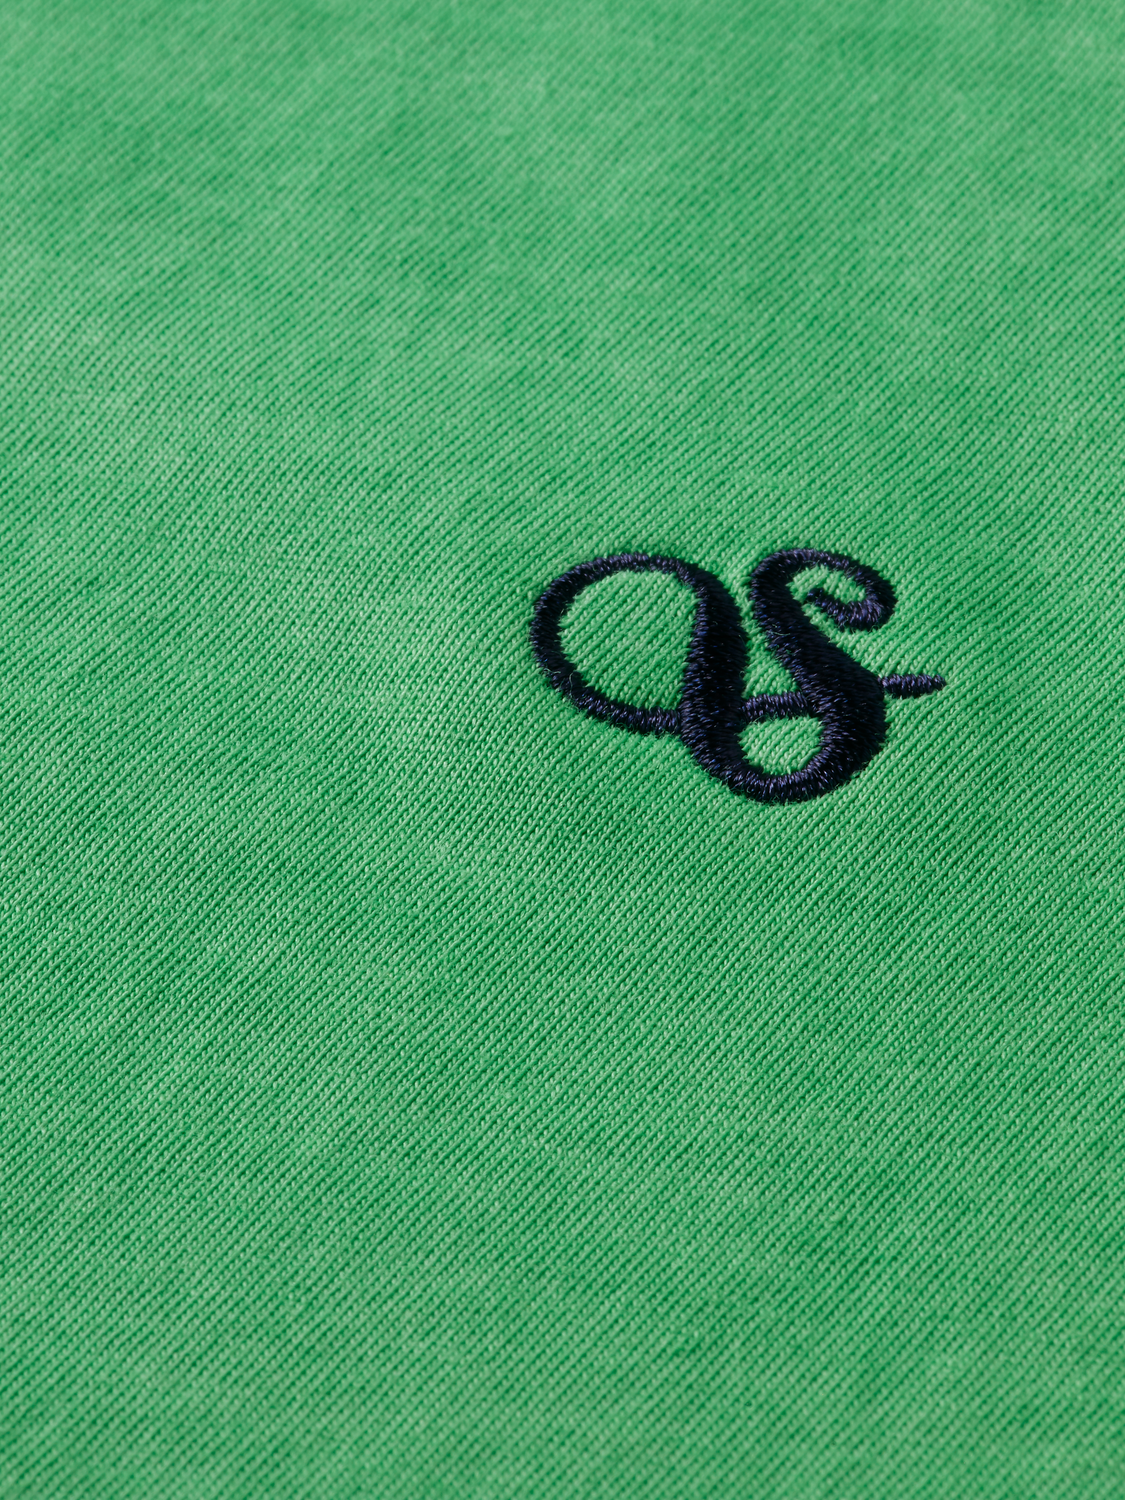 Scotch & Soda - Logo Embroidery Tee - Green or Blue